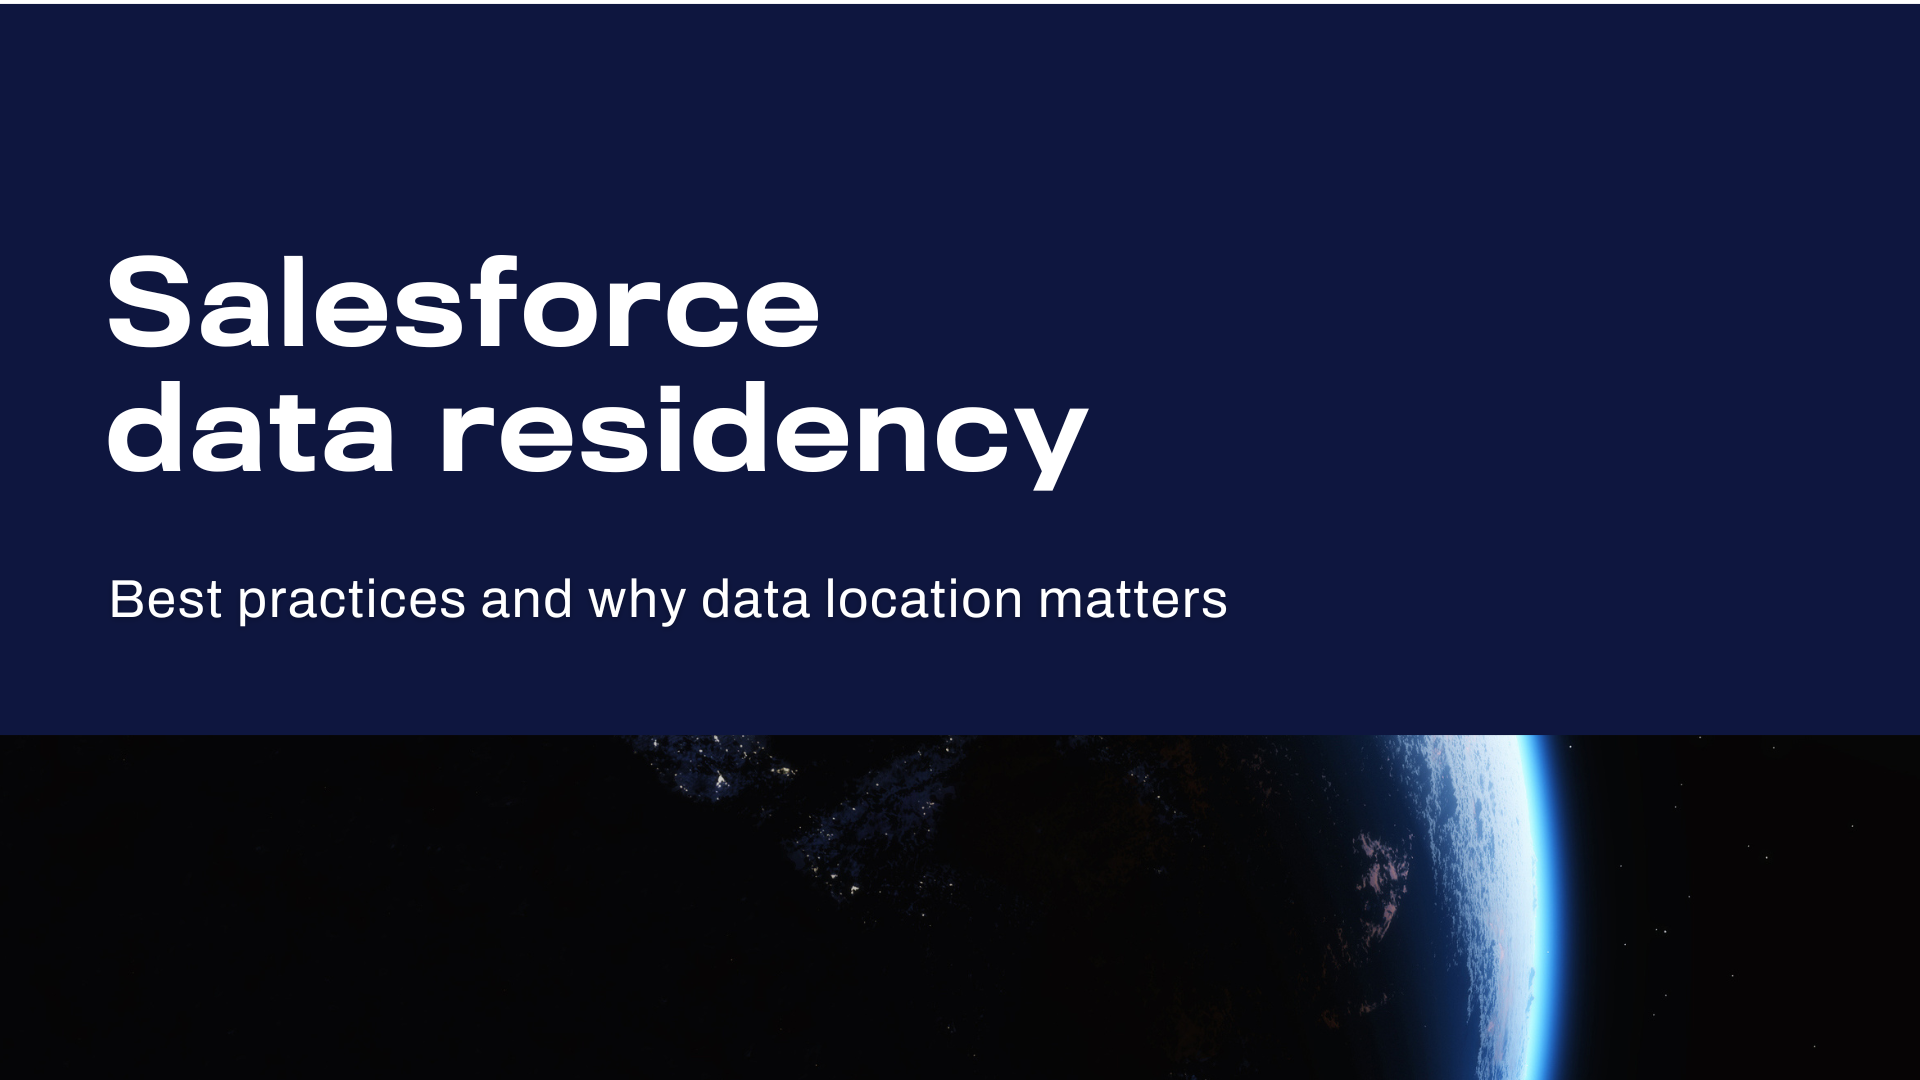 Salesforce data residency best practices